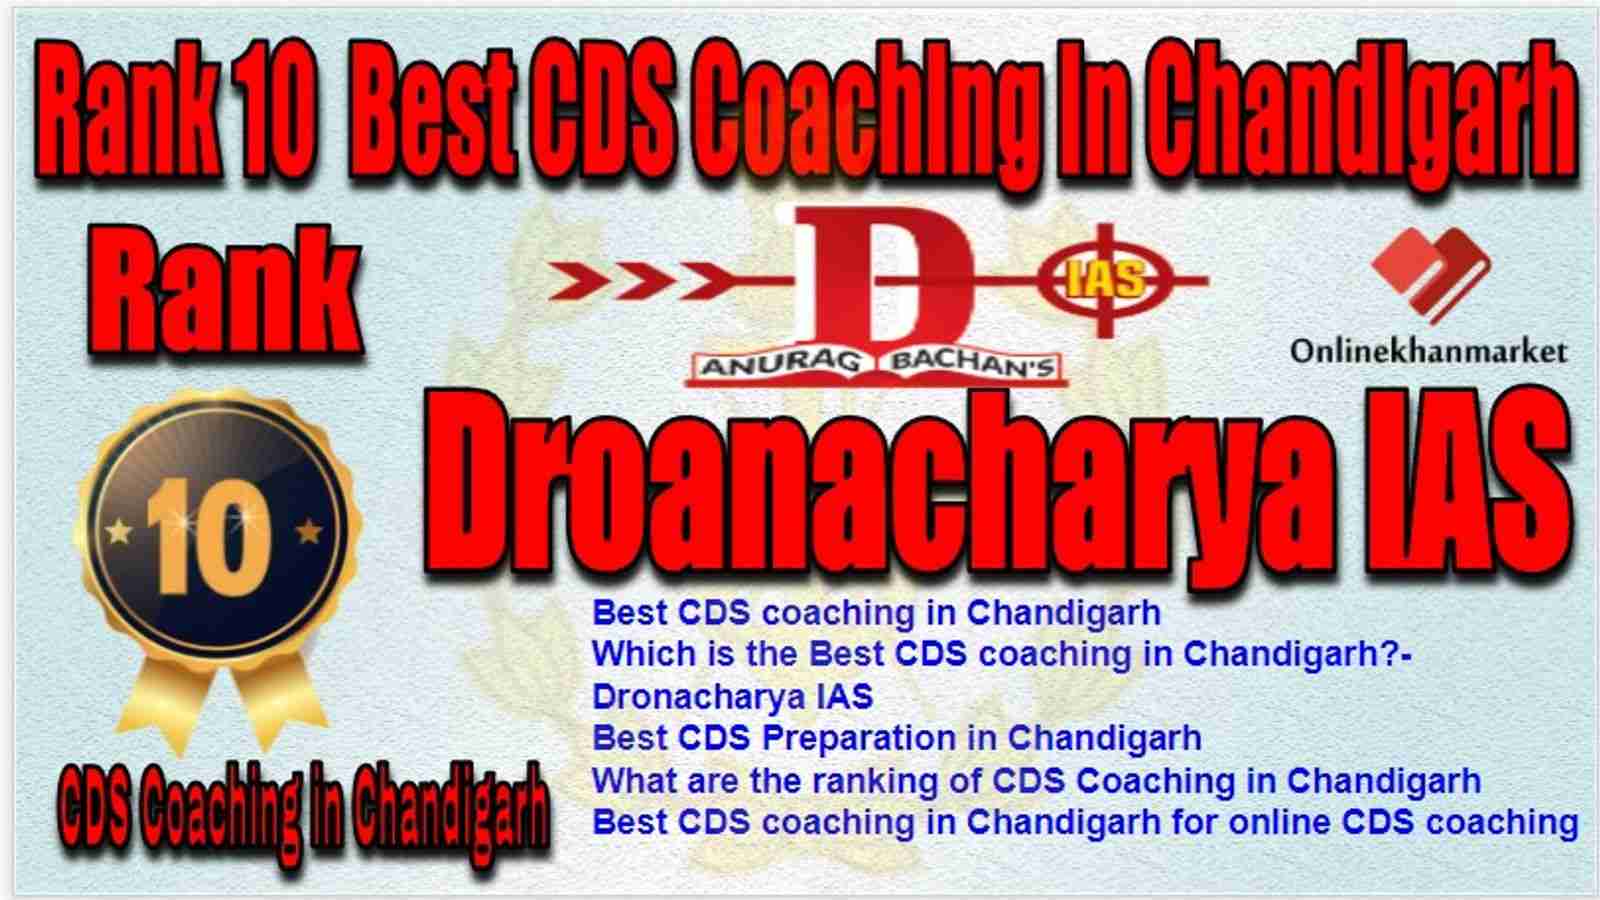 Rank 10 Best CDS Coaching in chandigarh